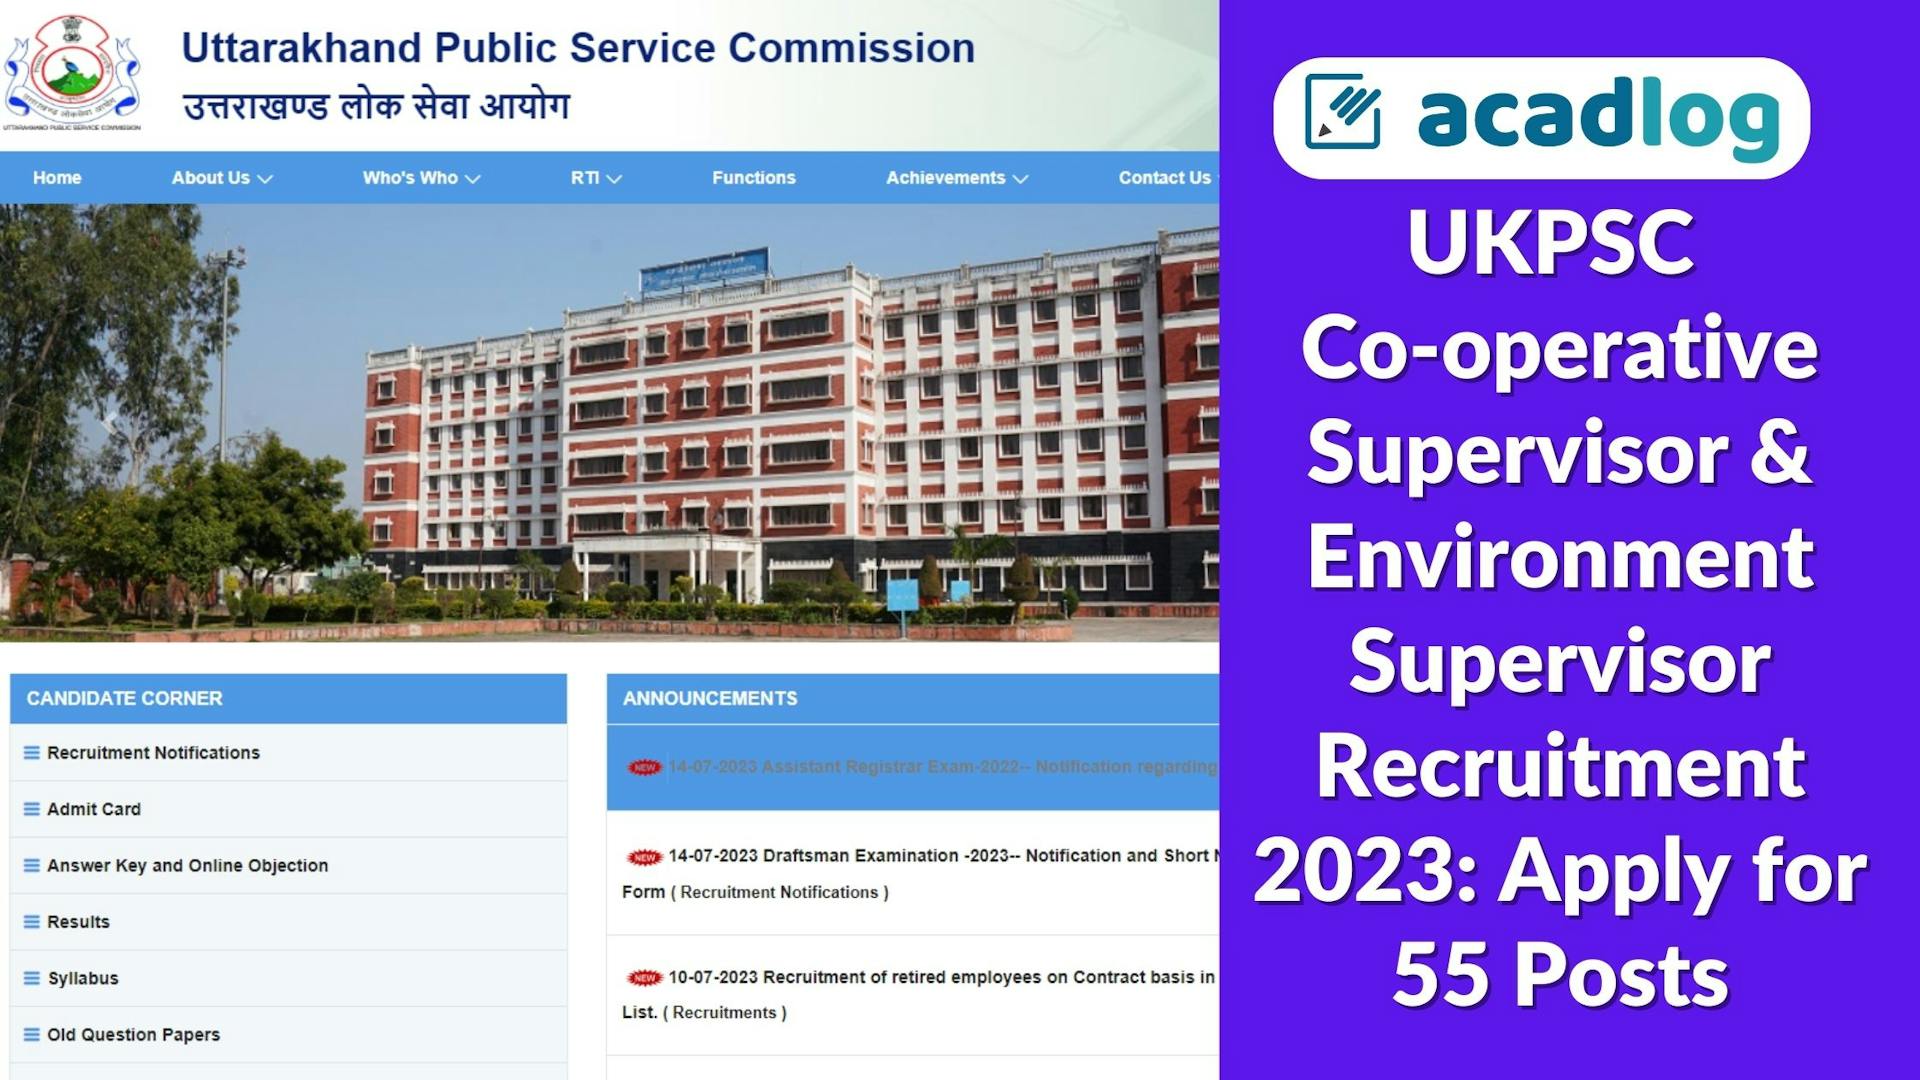 UKPSC Co-operative Supervisor & Environment Supervisor Recruitment 2023: Apply for 55 Posts